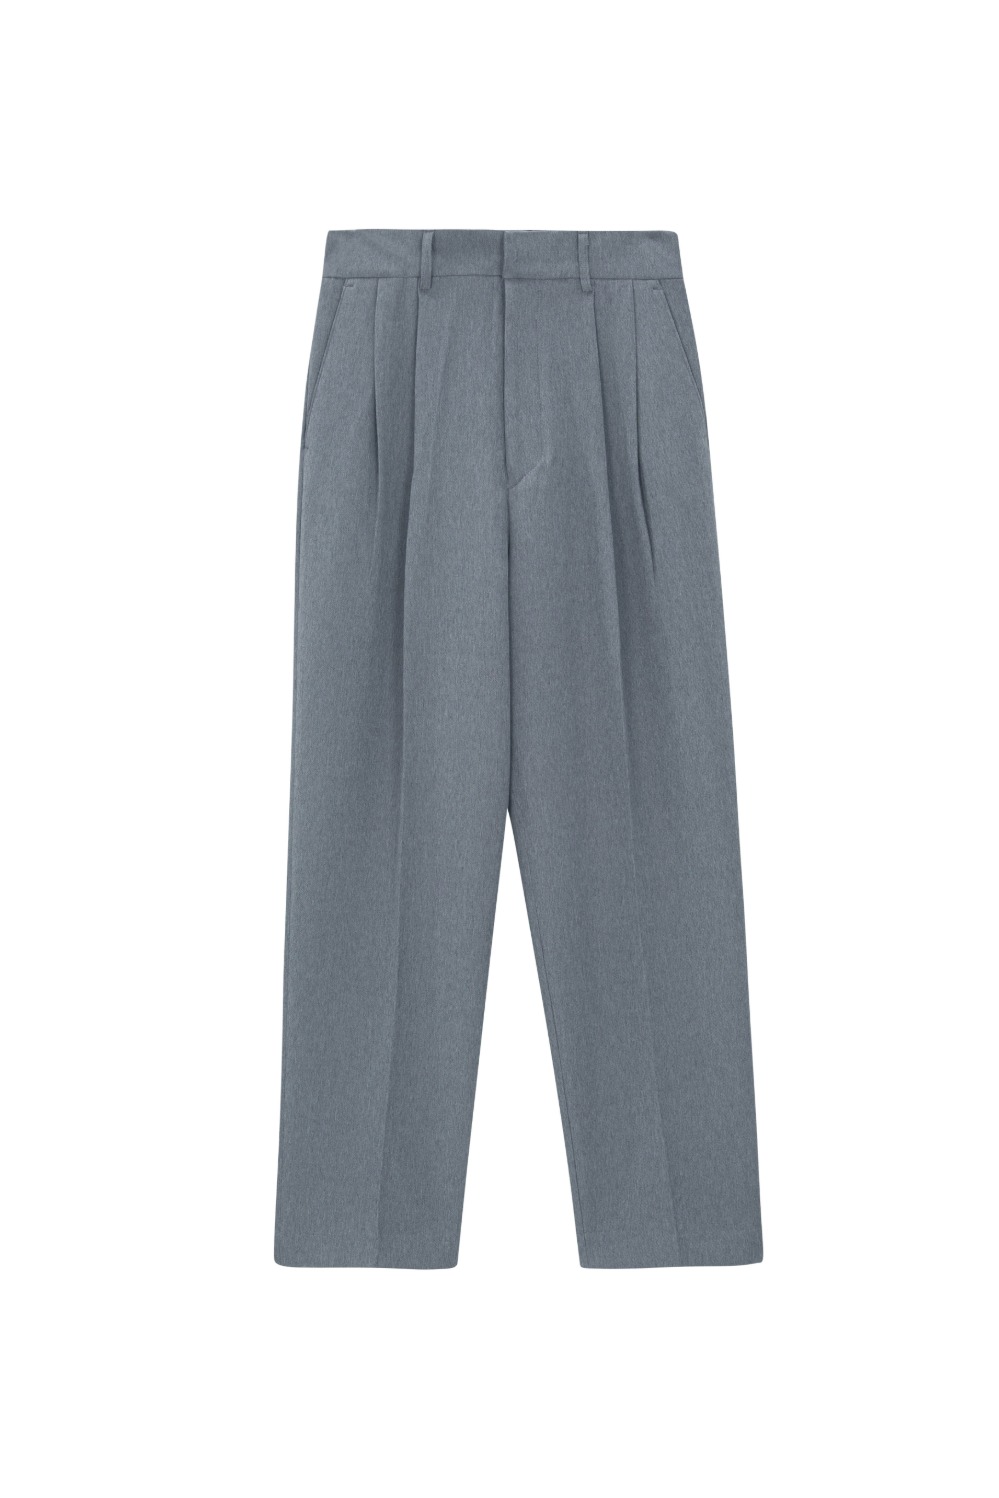 Two Pleats Wide Banding Pants (Grey)